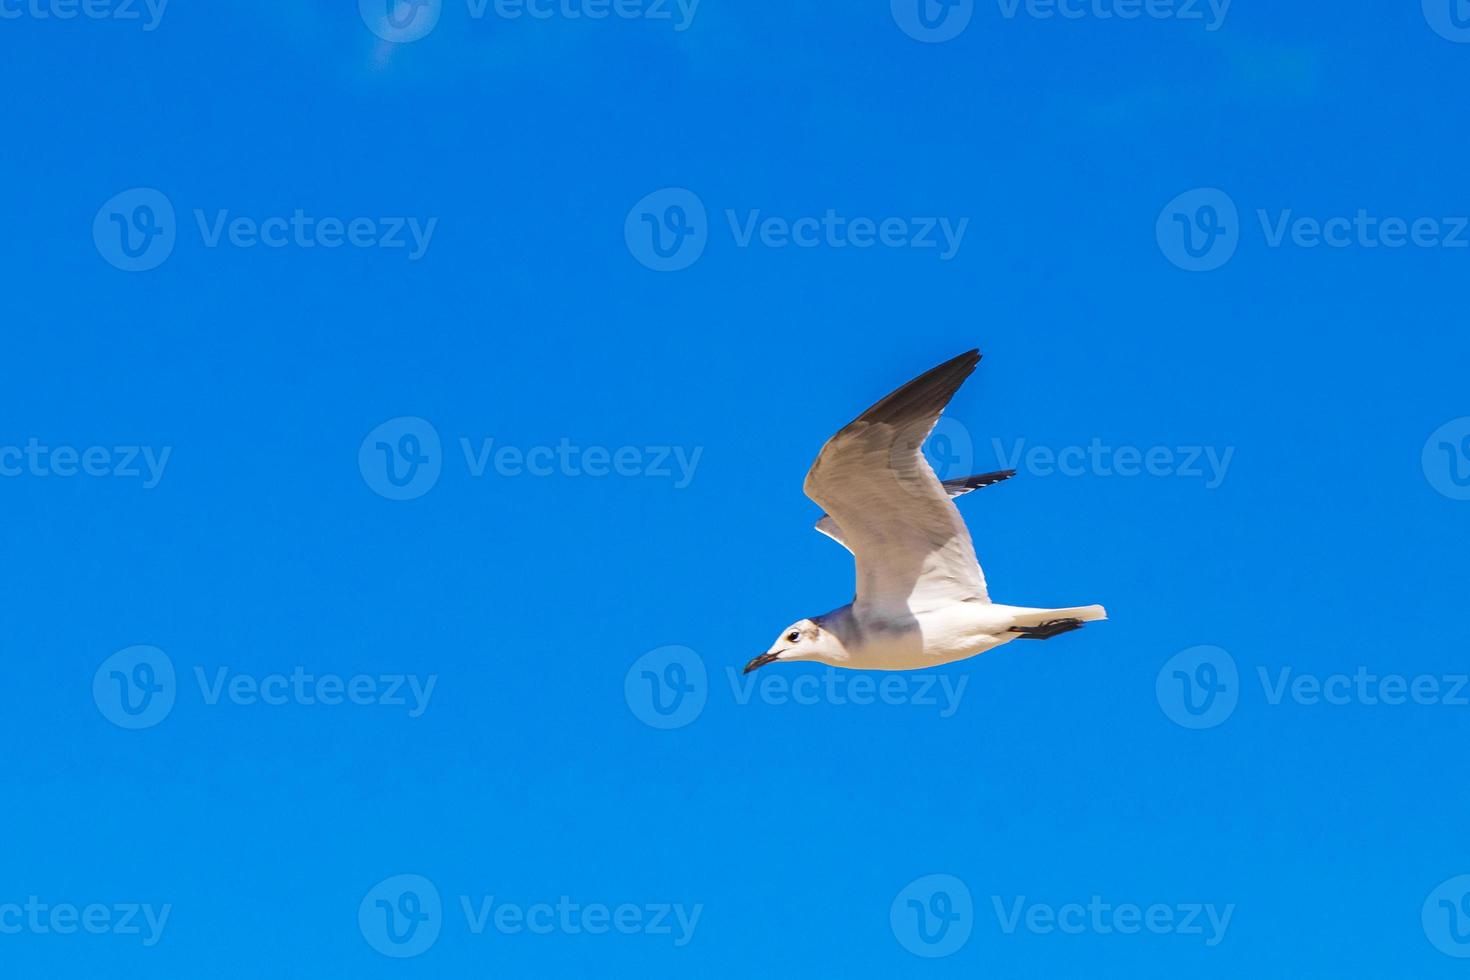 vliegende zeemeeuwvogel met blauwe hemelachtergrond holbox eiland mexico. foto